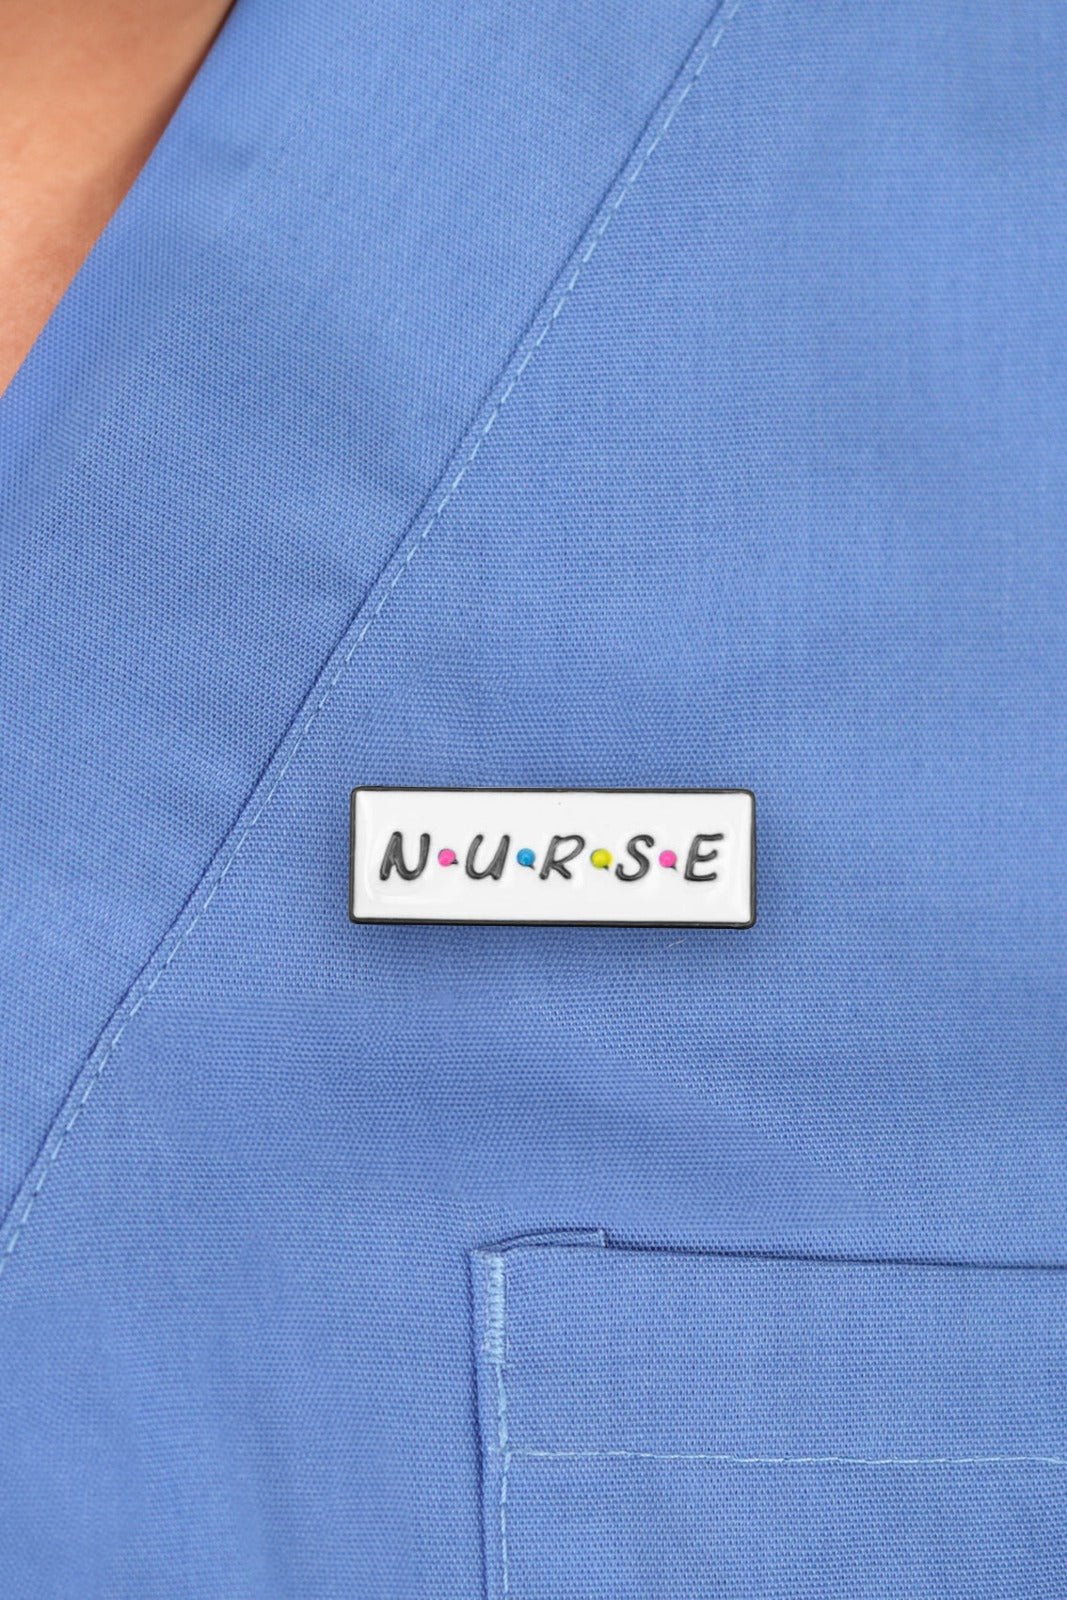 Friends Nurse Pin